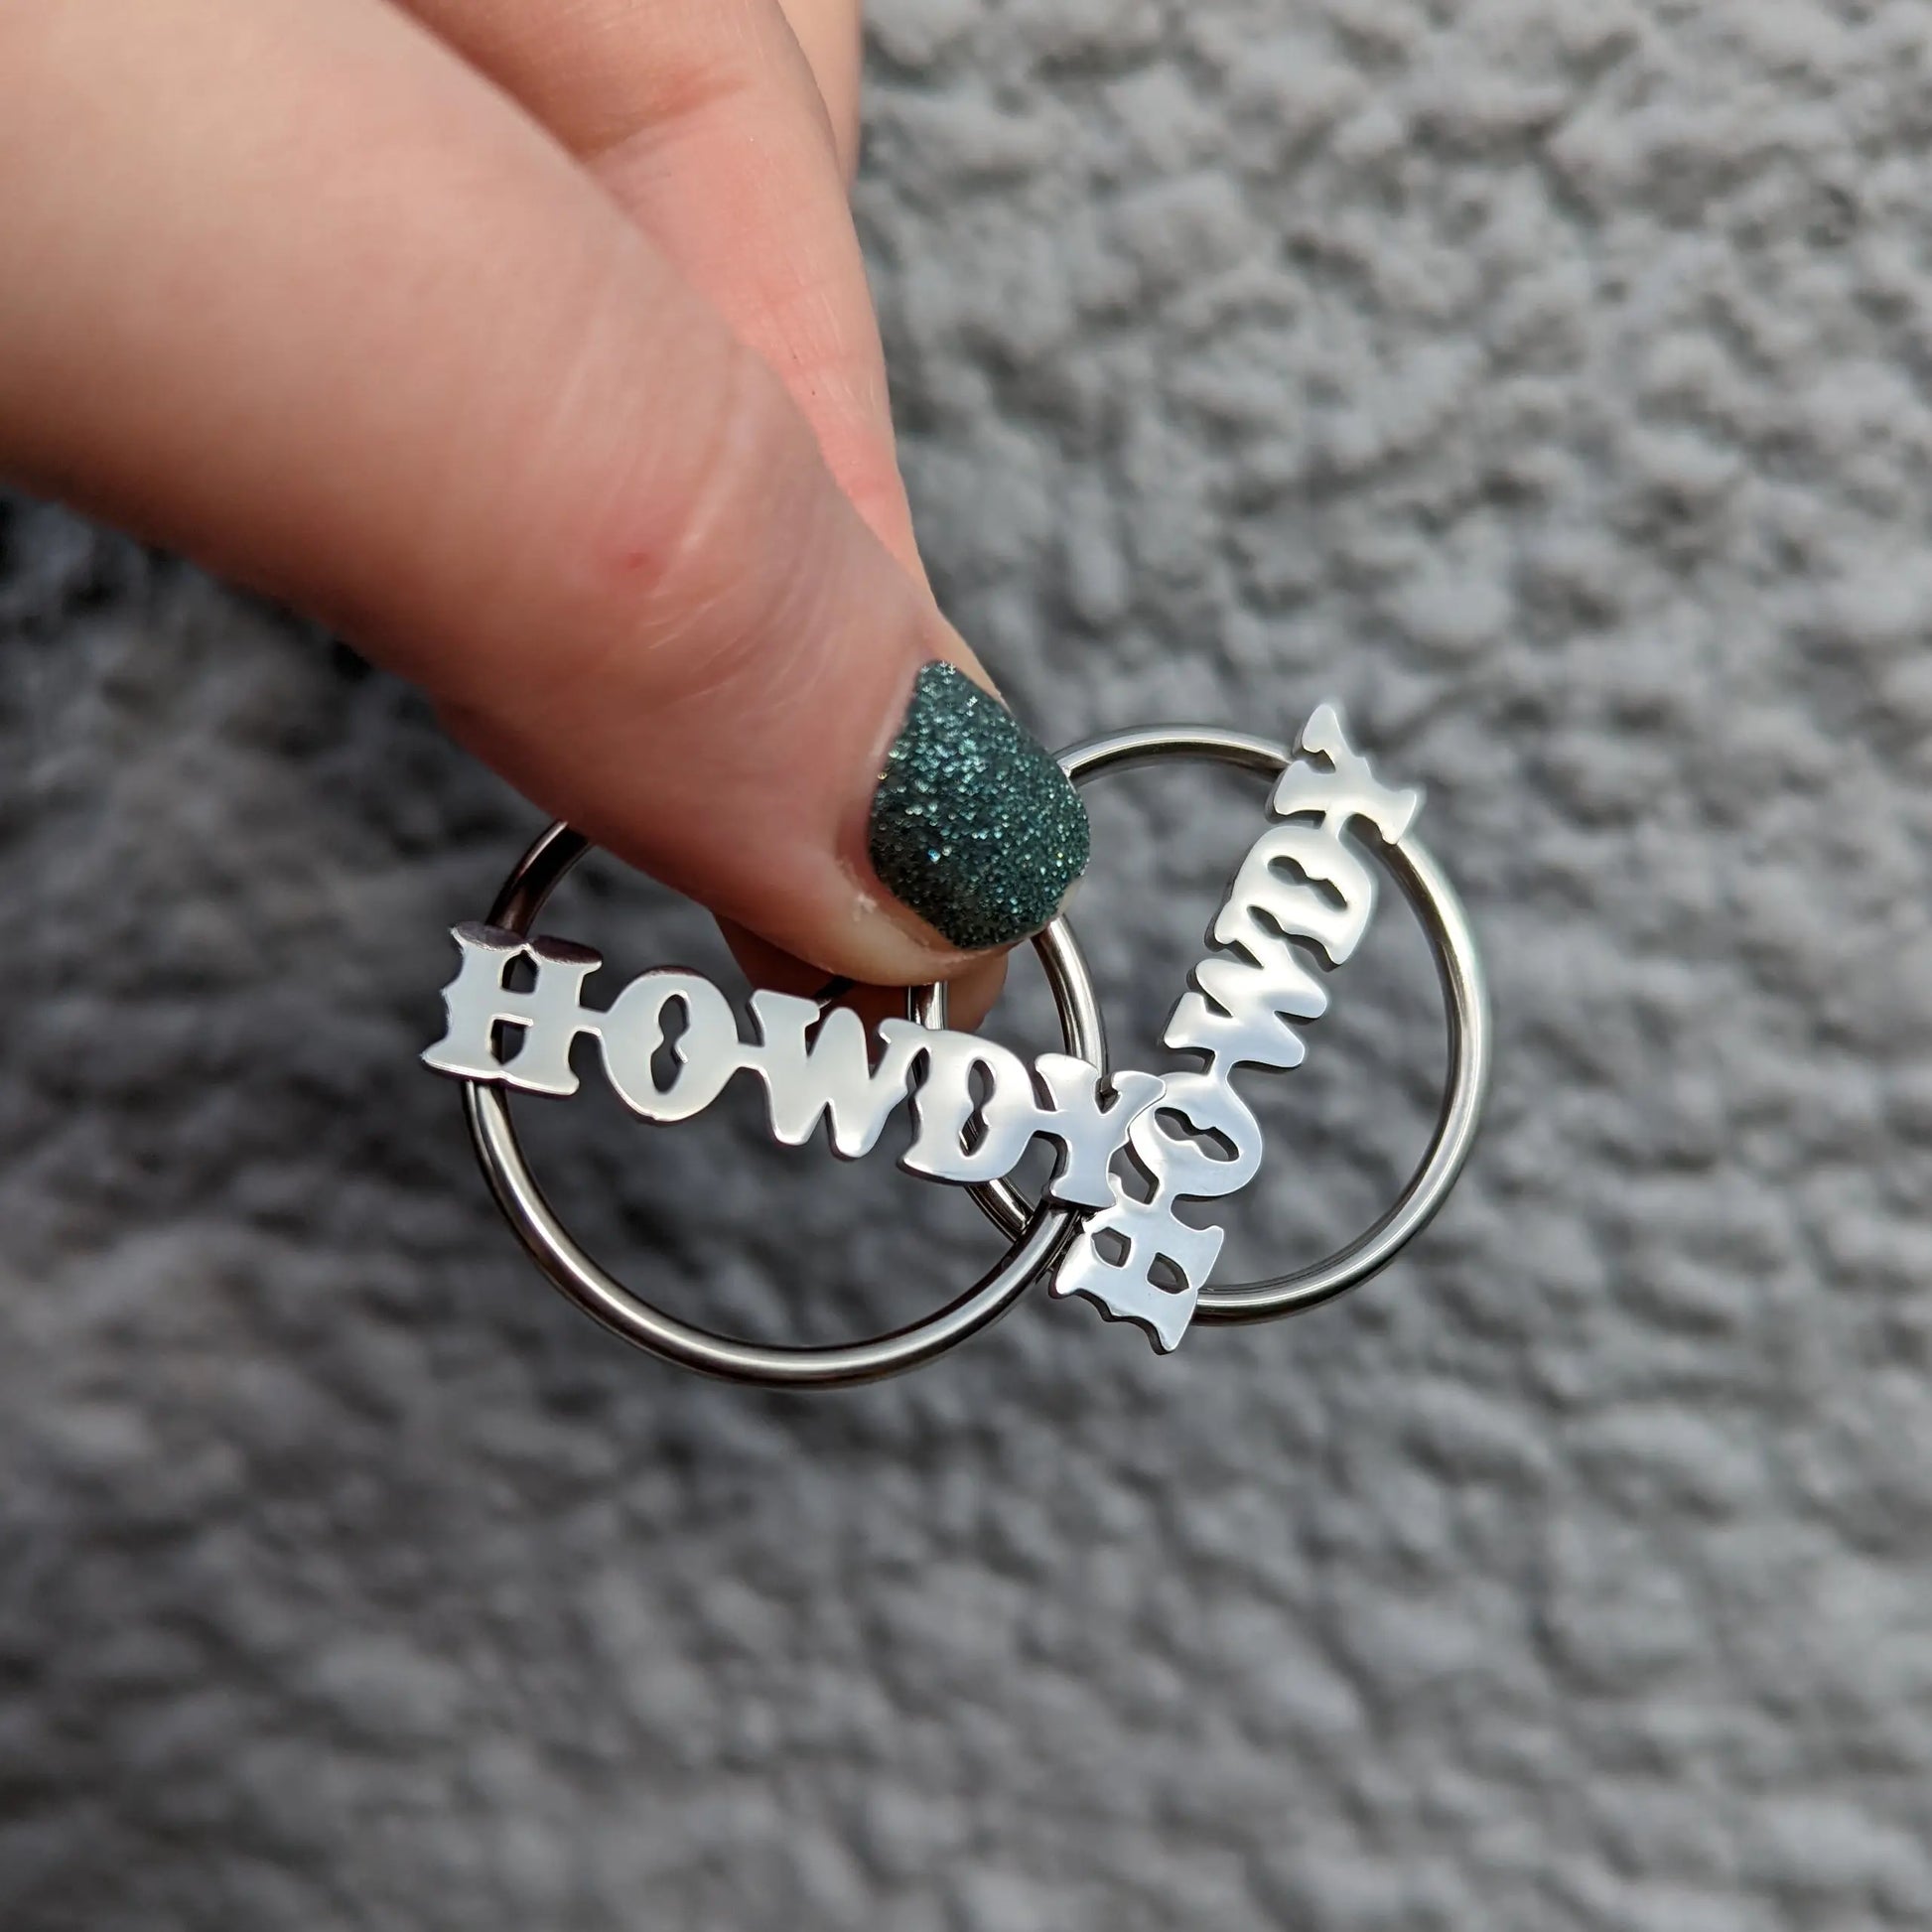 Howdy hoop earrings - Trend Tonic 